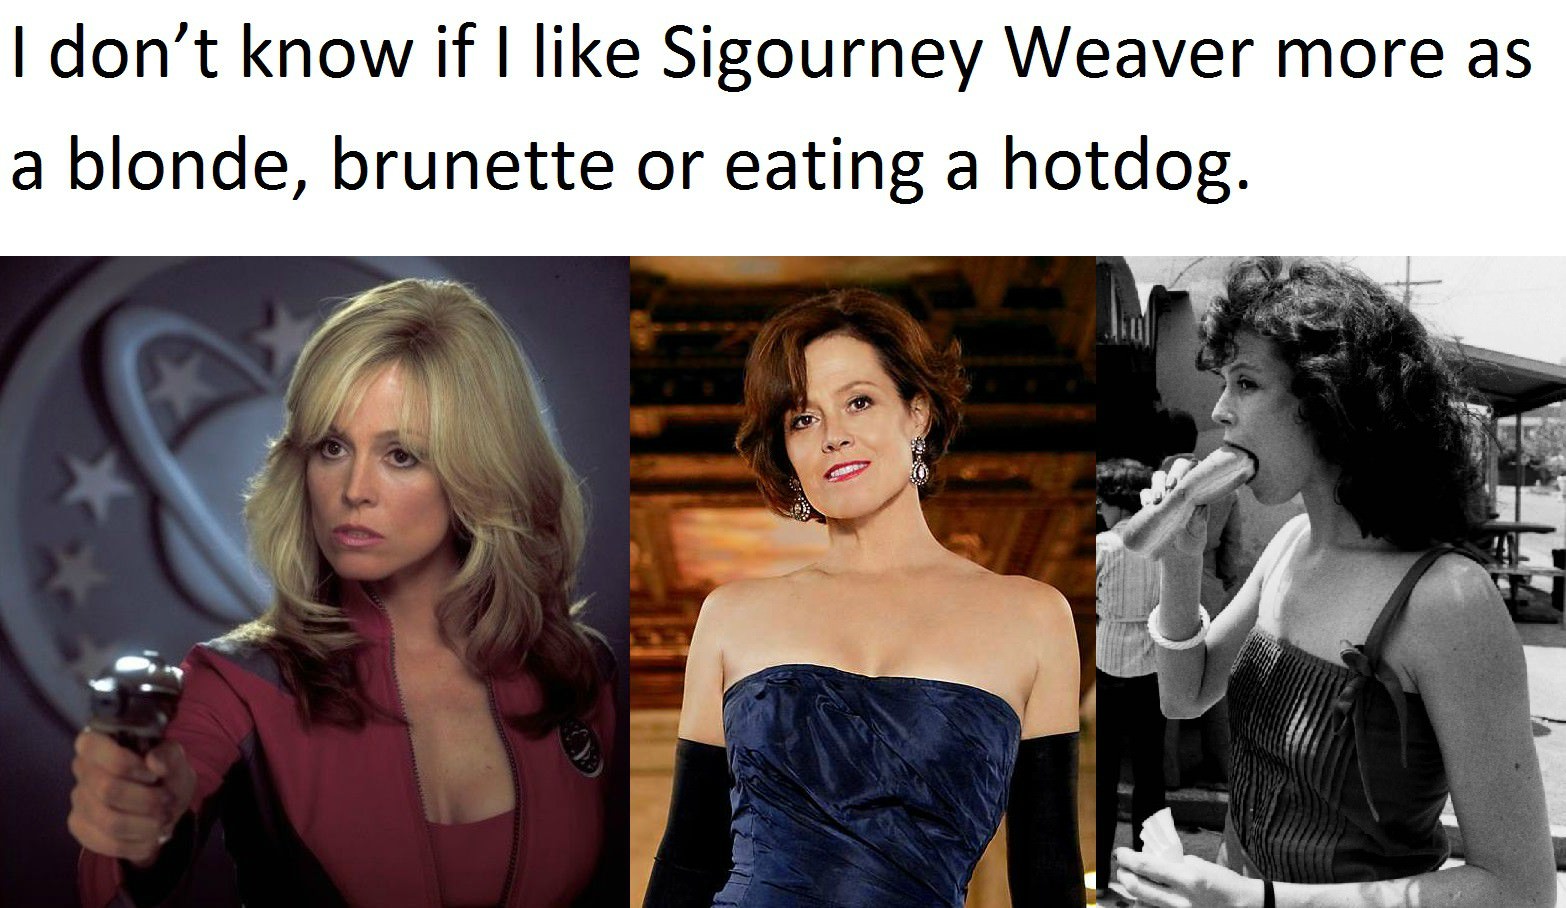 sigourney weaver memes - I don't know if I Sigourney Weaver more as a blonde, brunette or eating a hotdog.